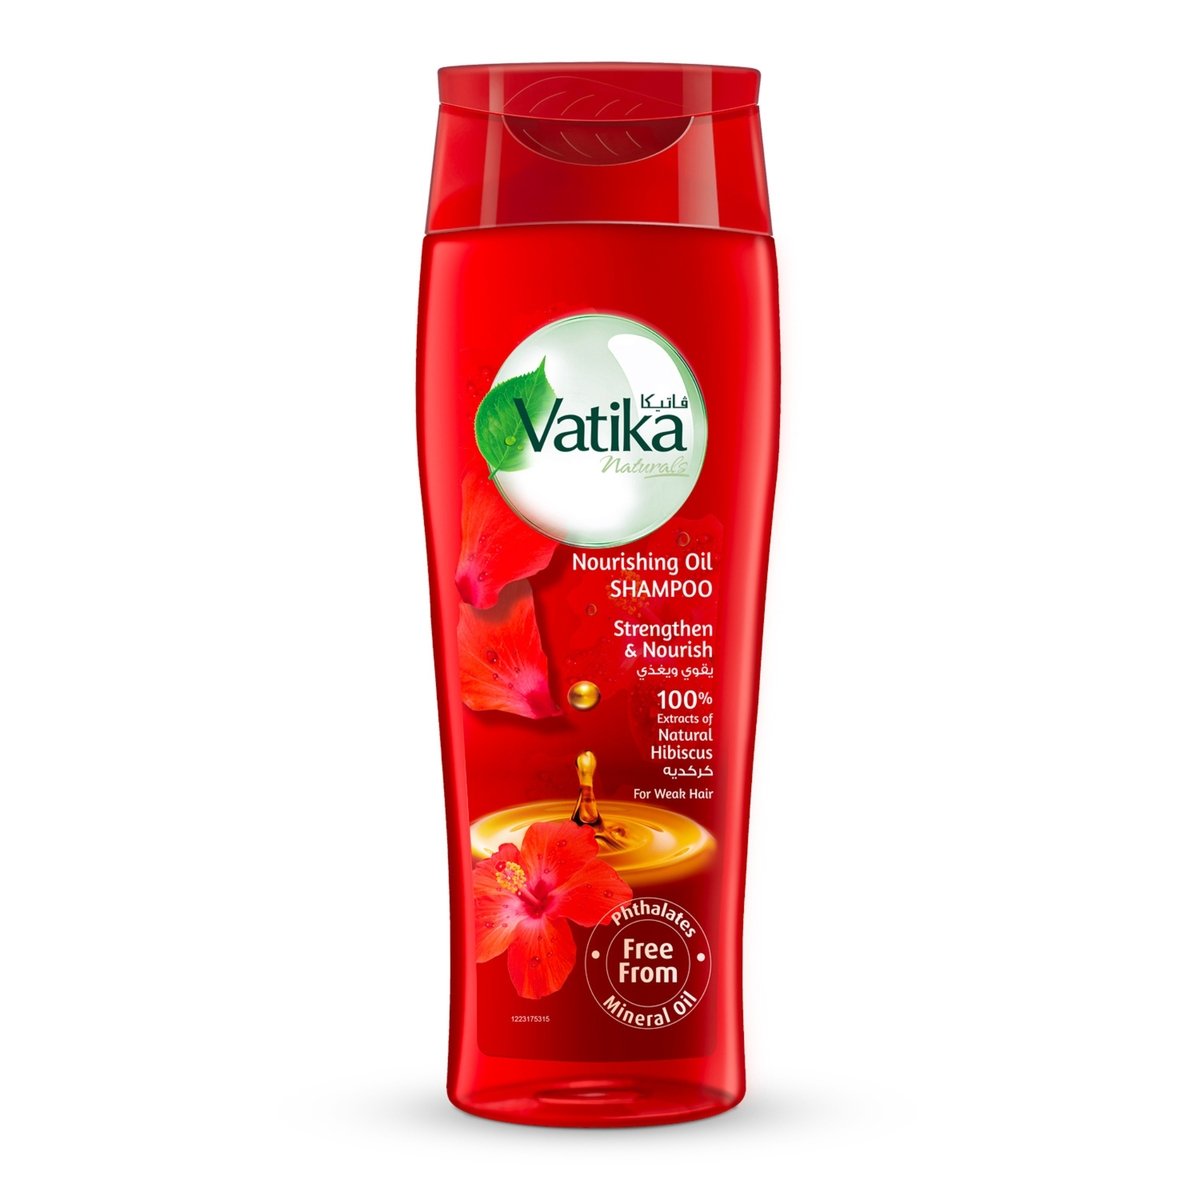 Vatika Naturals Nourishing Oil Shampoo Strengthen & Nourish Enriched with Hibiscus 425 ml